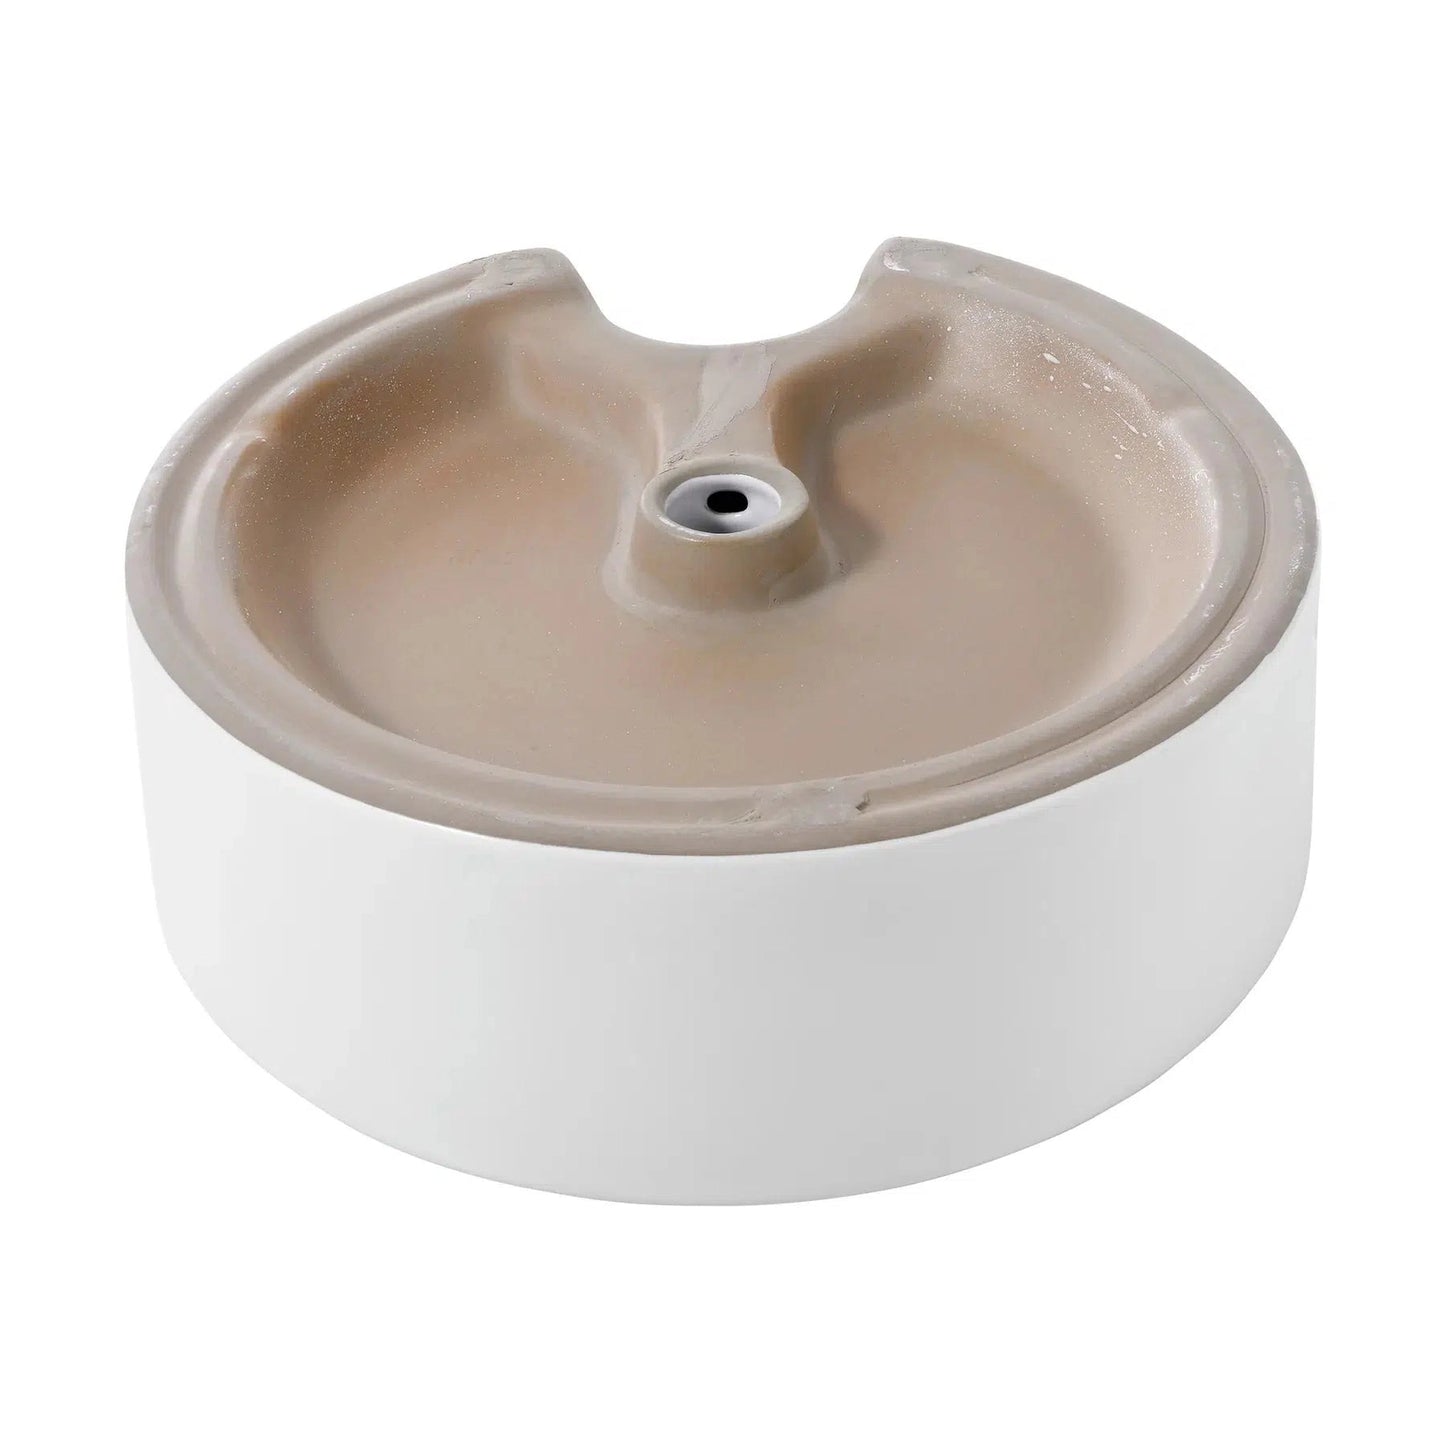 Swiss Madison Monaco 18" x 18" White Round Ceramic Bathroom Vessel Sink With Faucet Hole